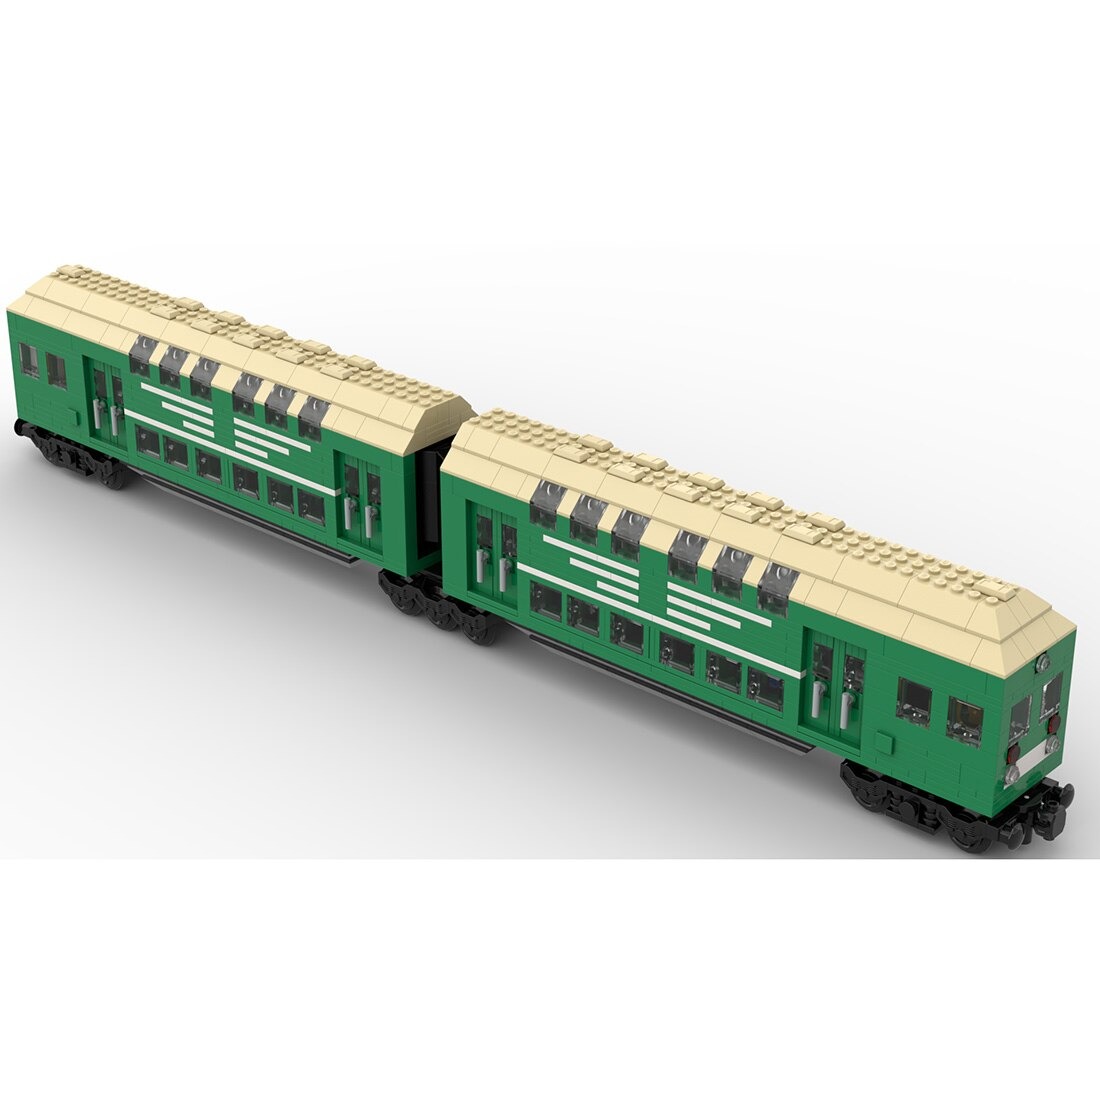 authorized moc 109281 7 axle train carri main 4 1 - ZHEGAO Block